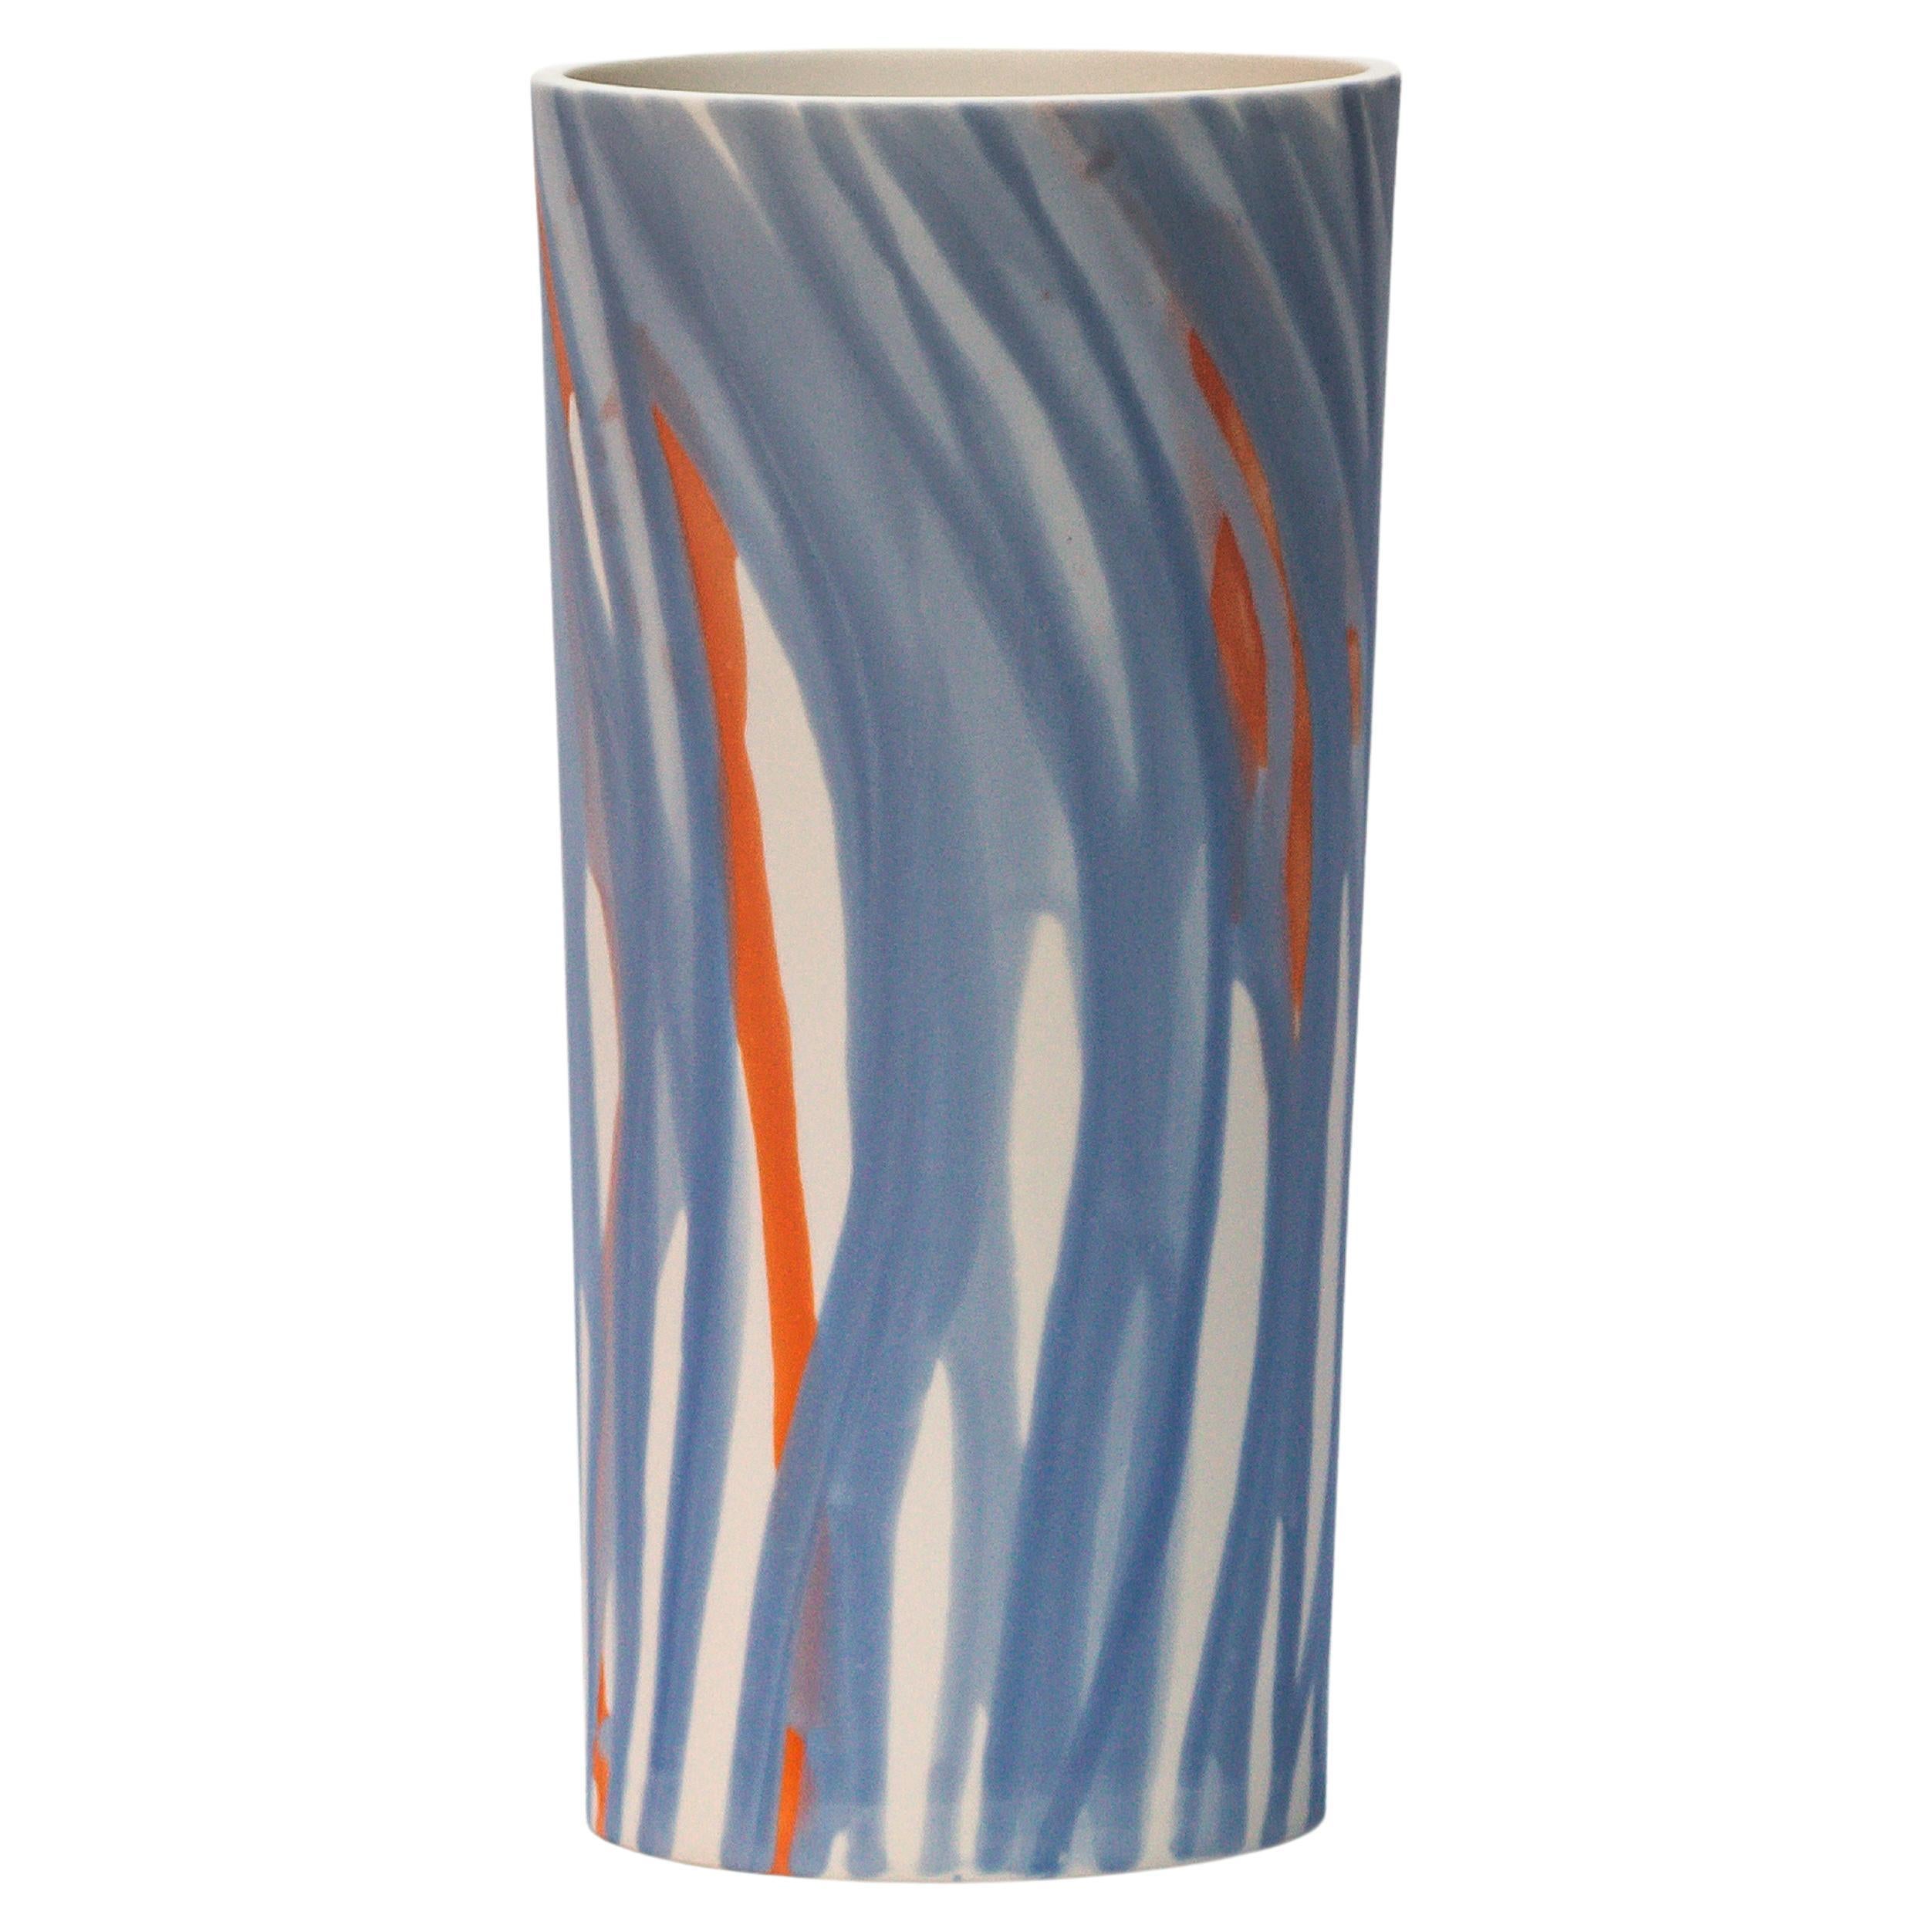 Salmon and Sky Porcelain Vase Unique Parianware Contemporary 21st Century UK